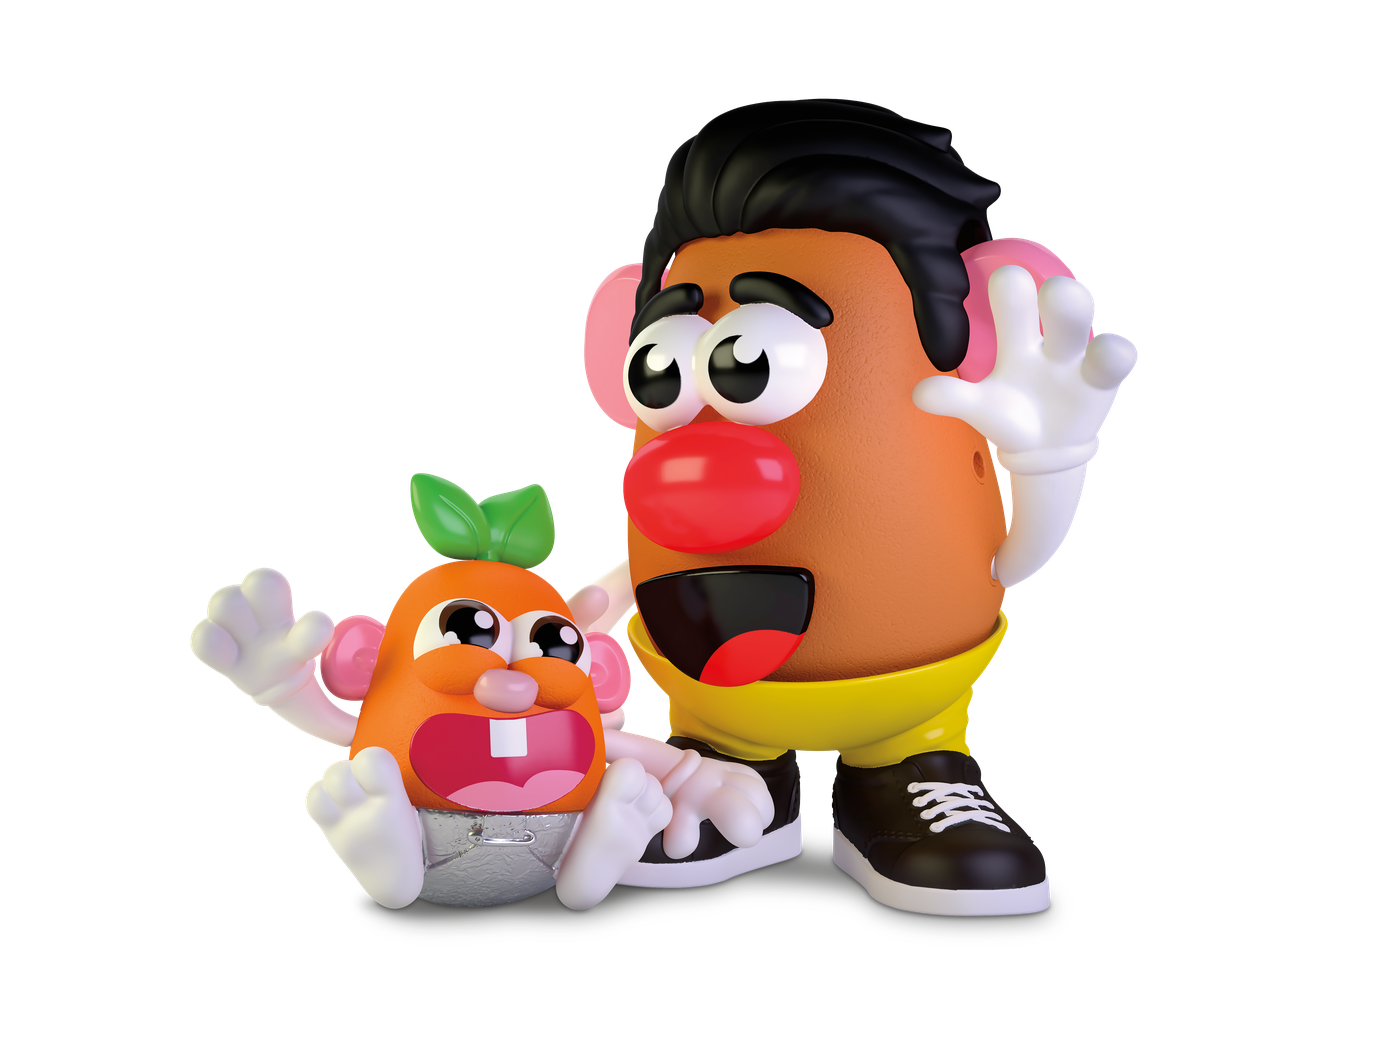 Hasbro relaunches Mr. Potato Head as gender neutral Potato Head